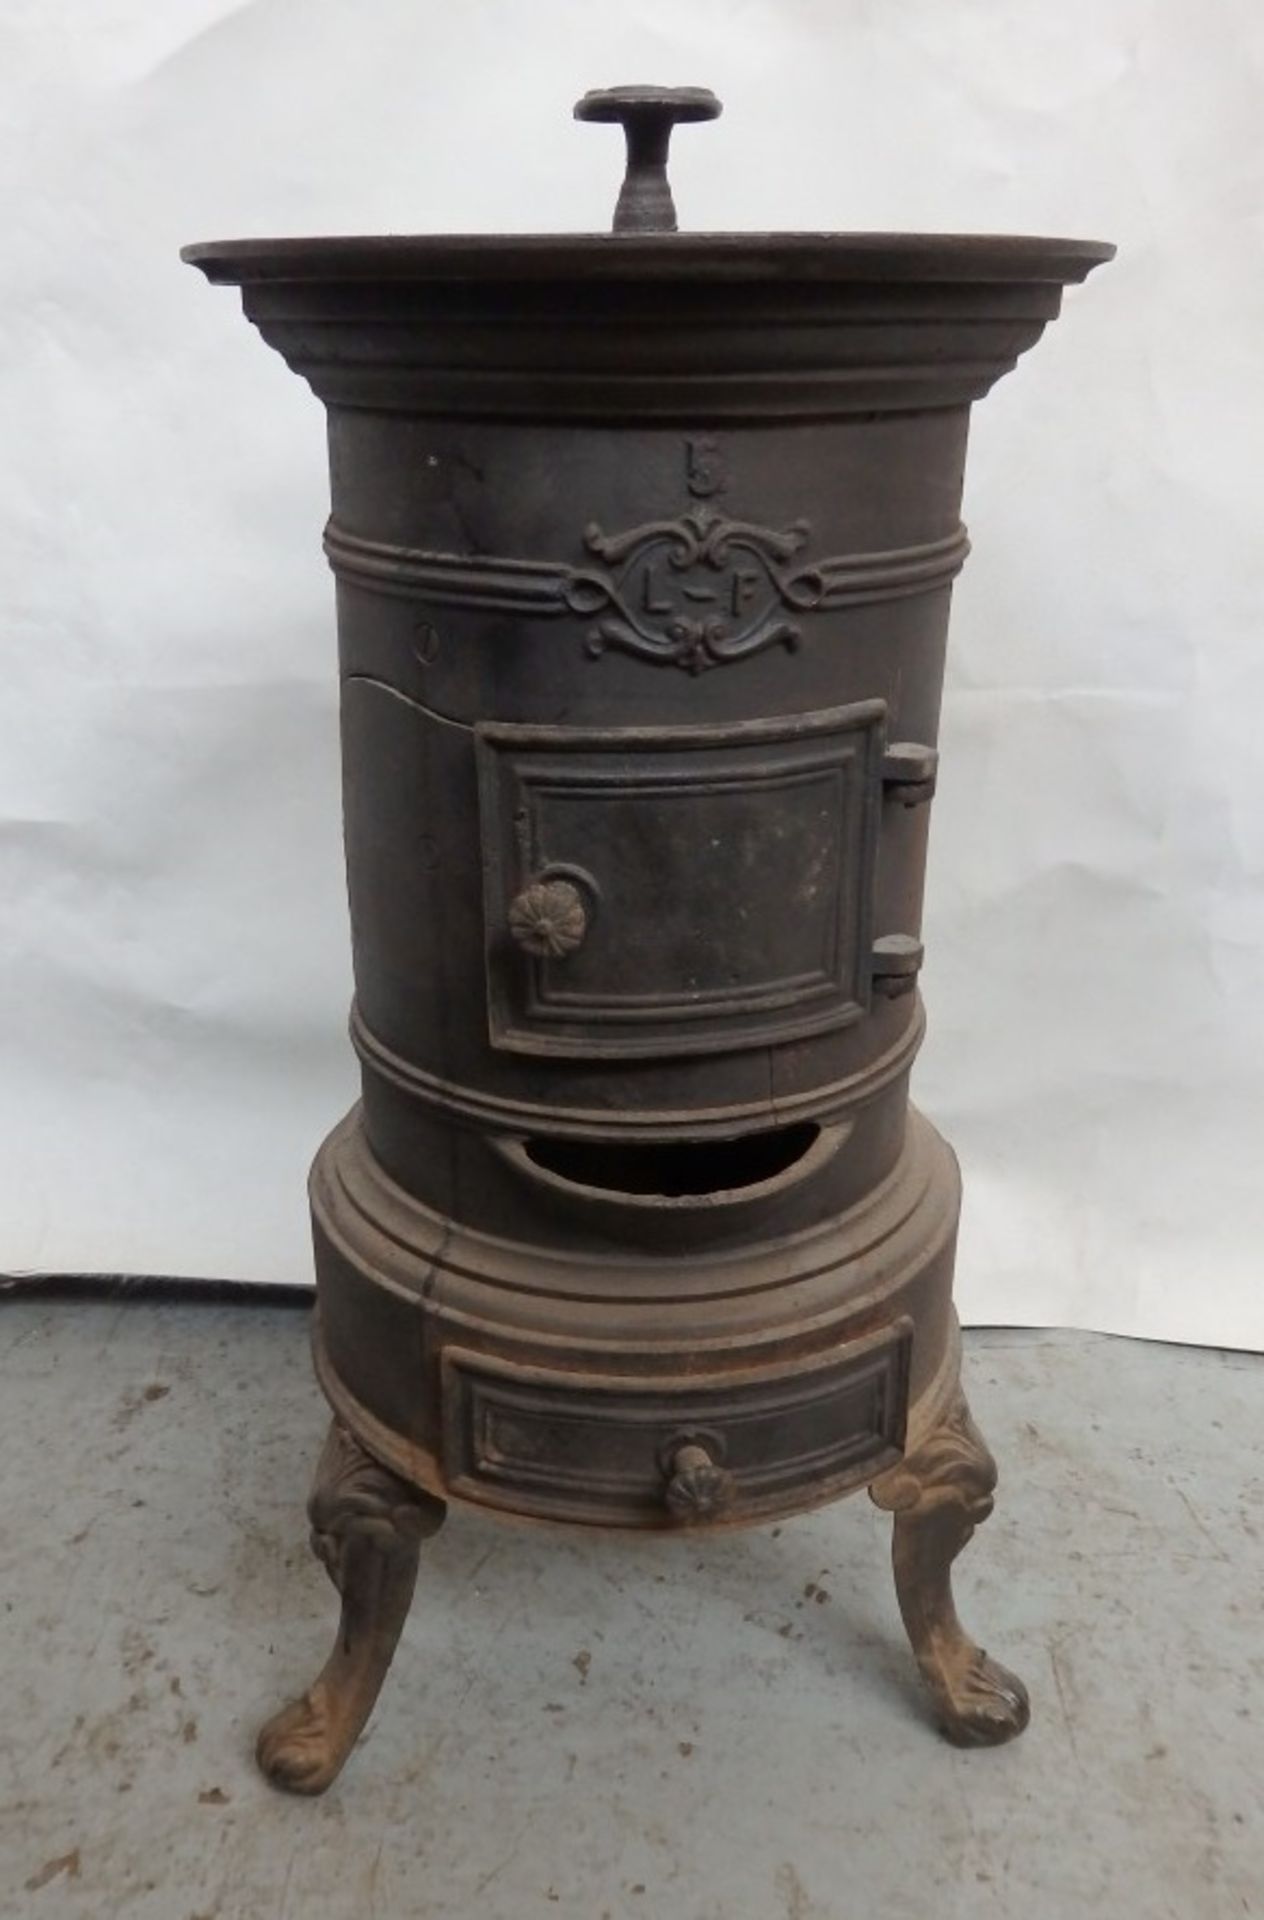 1 x Reclaimed Antique Cast Iron Potbelly Wood Burner / Stove - Dimensions: H61, Diameter 30cm - Ref - Image 11 of 18